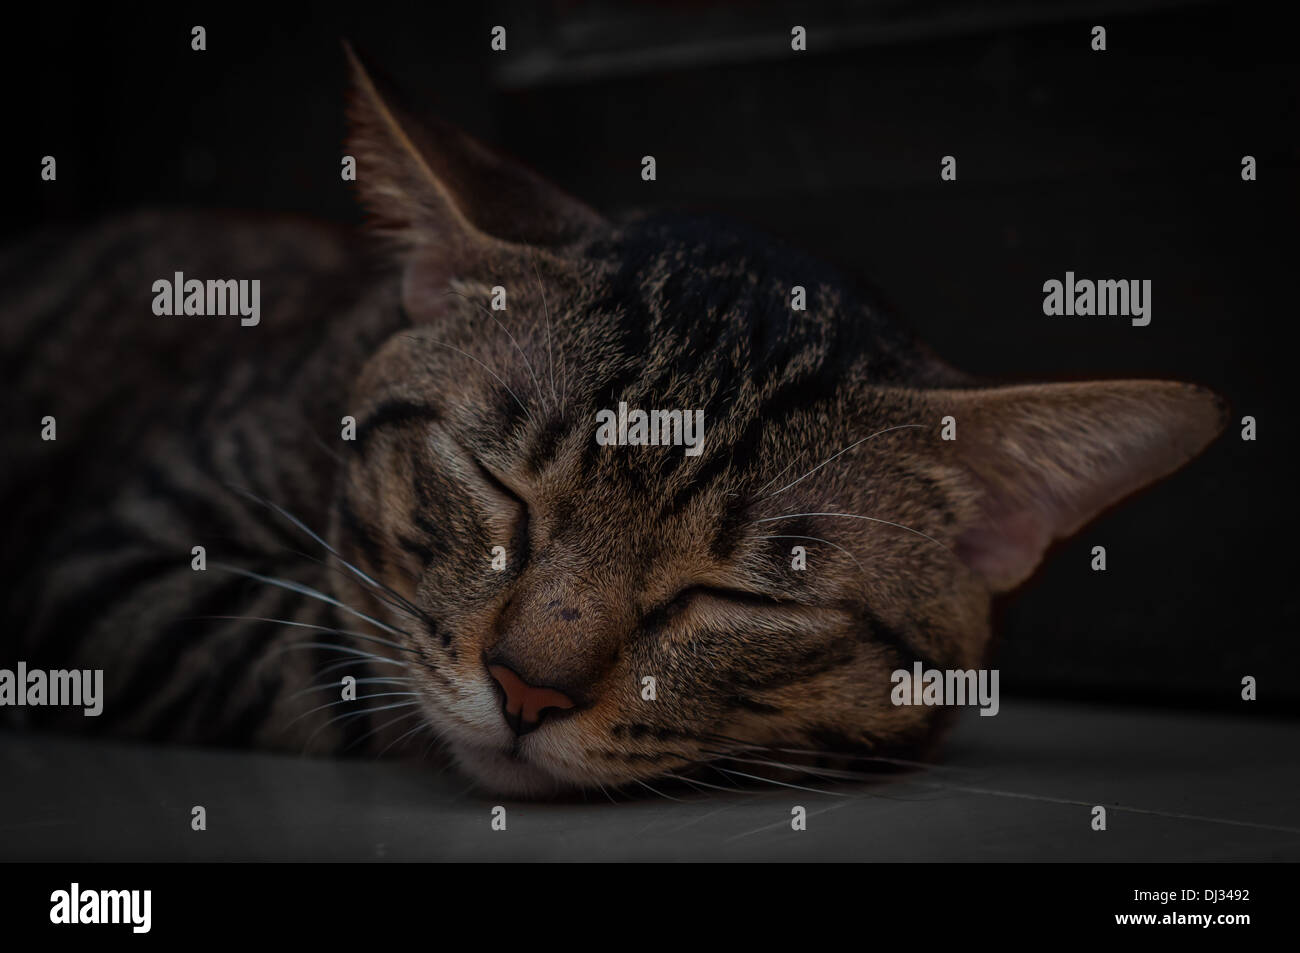 cat napping Stock Photo